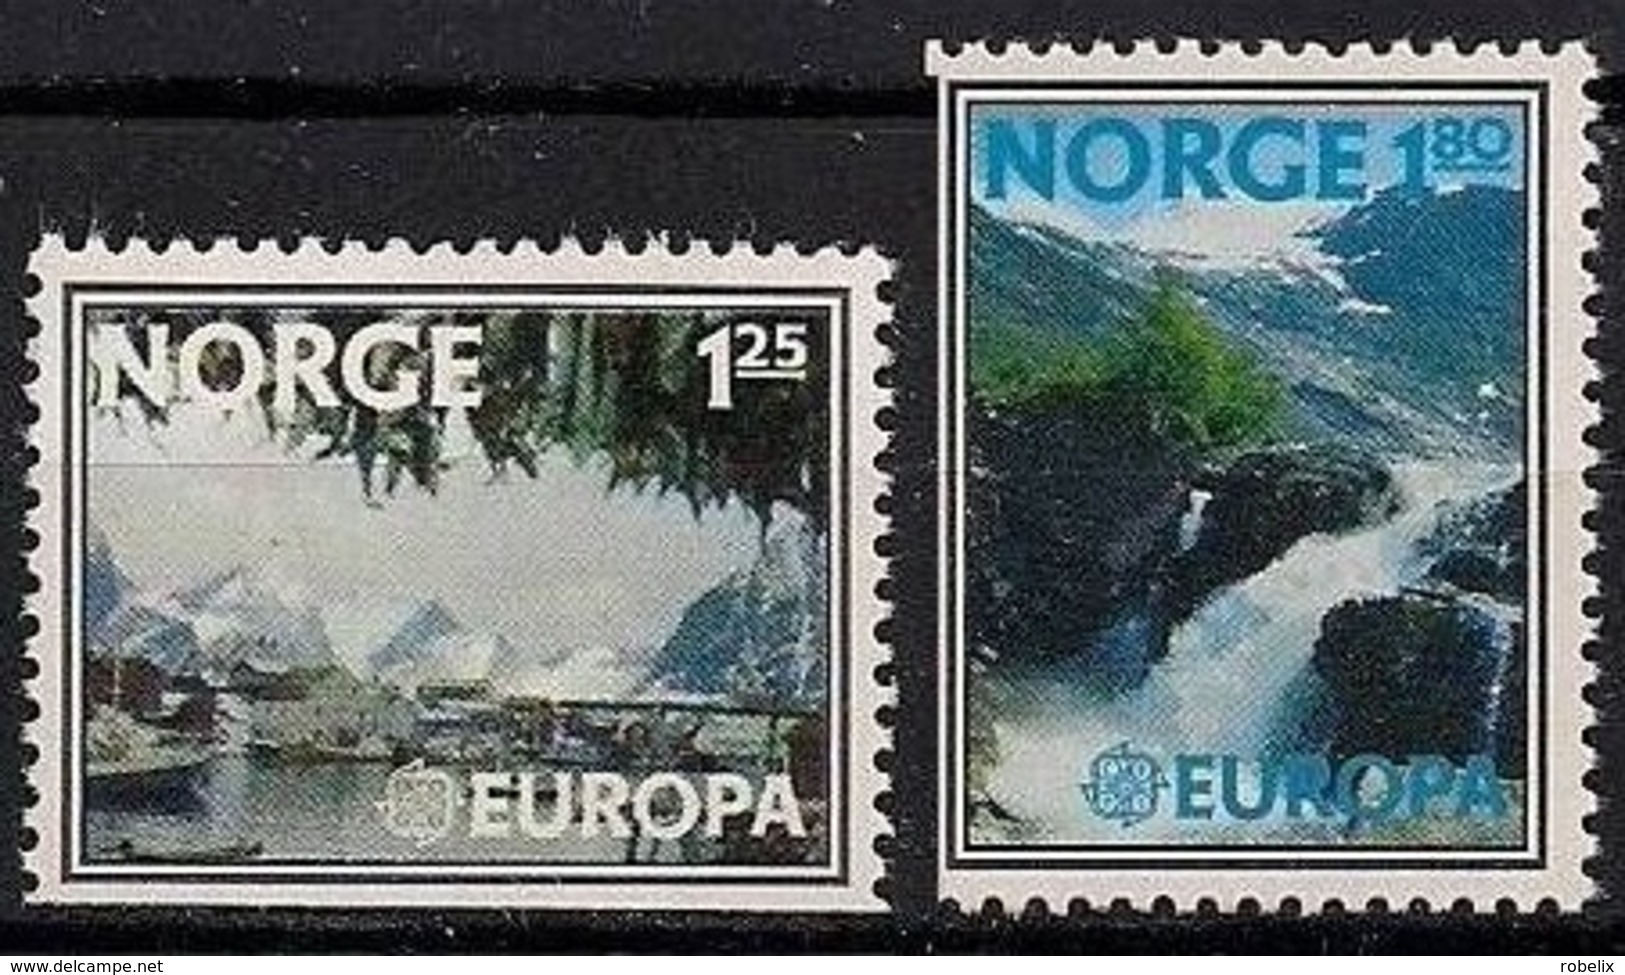 NORWAY   NORWEGEN  NORGE  1977   EUROPA CEPT    SET 2 Stamps   MNH** - 1977